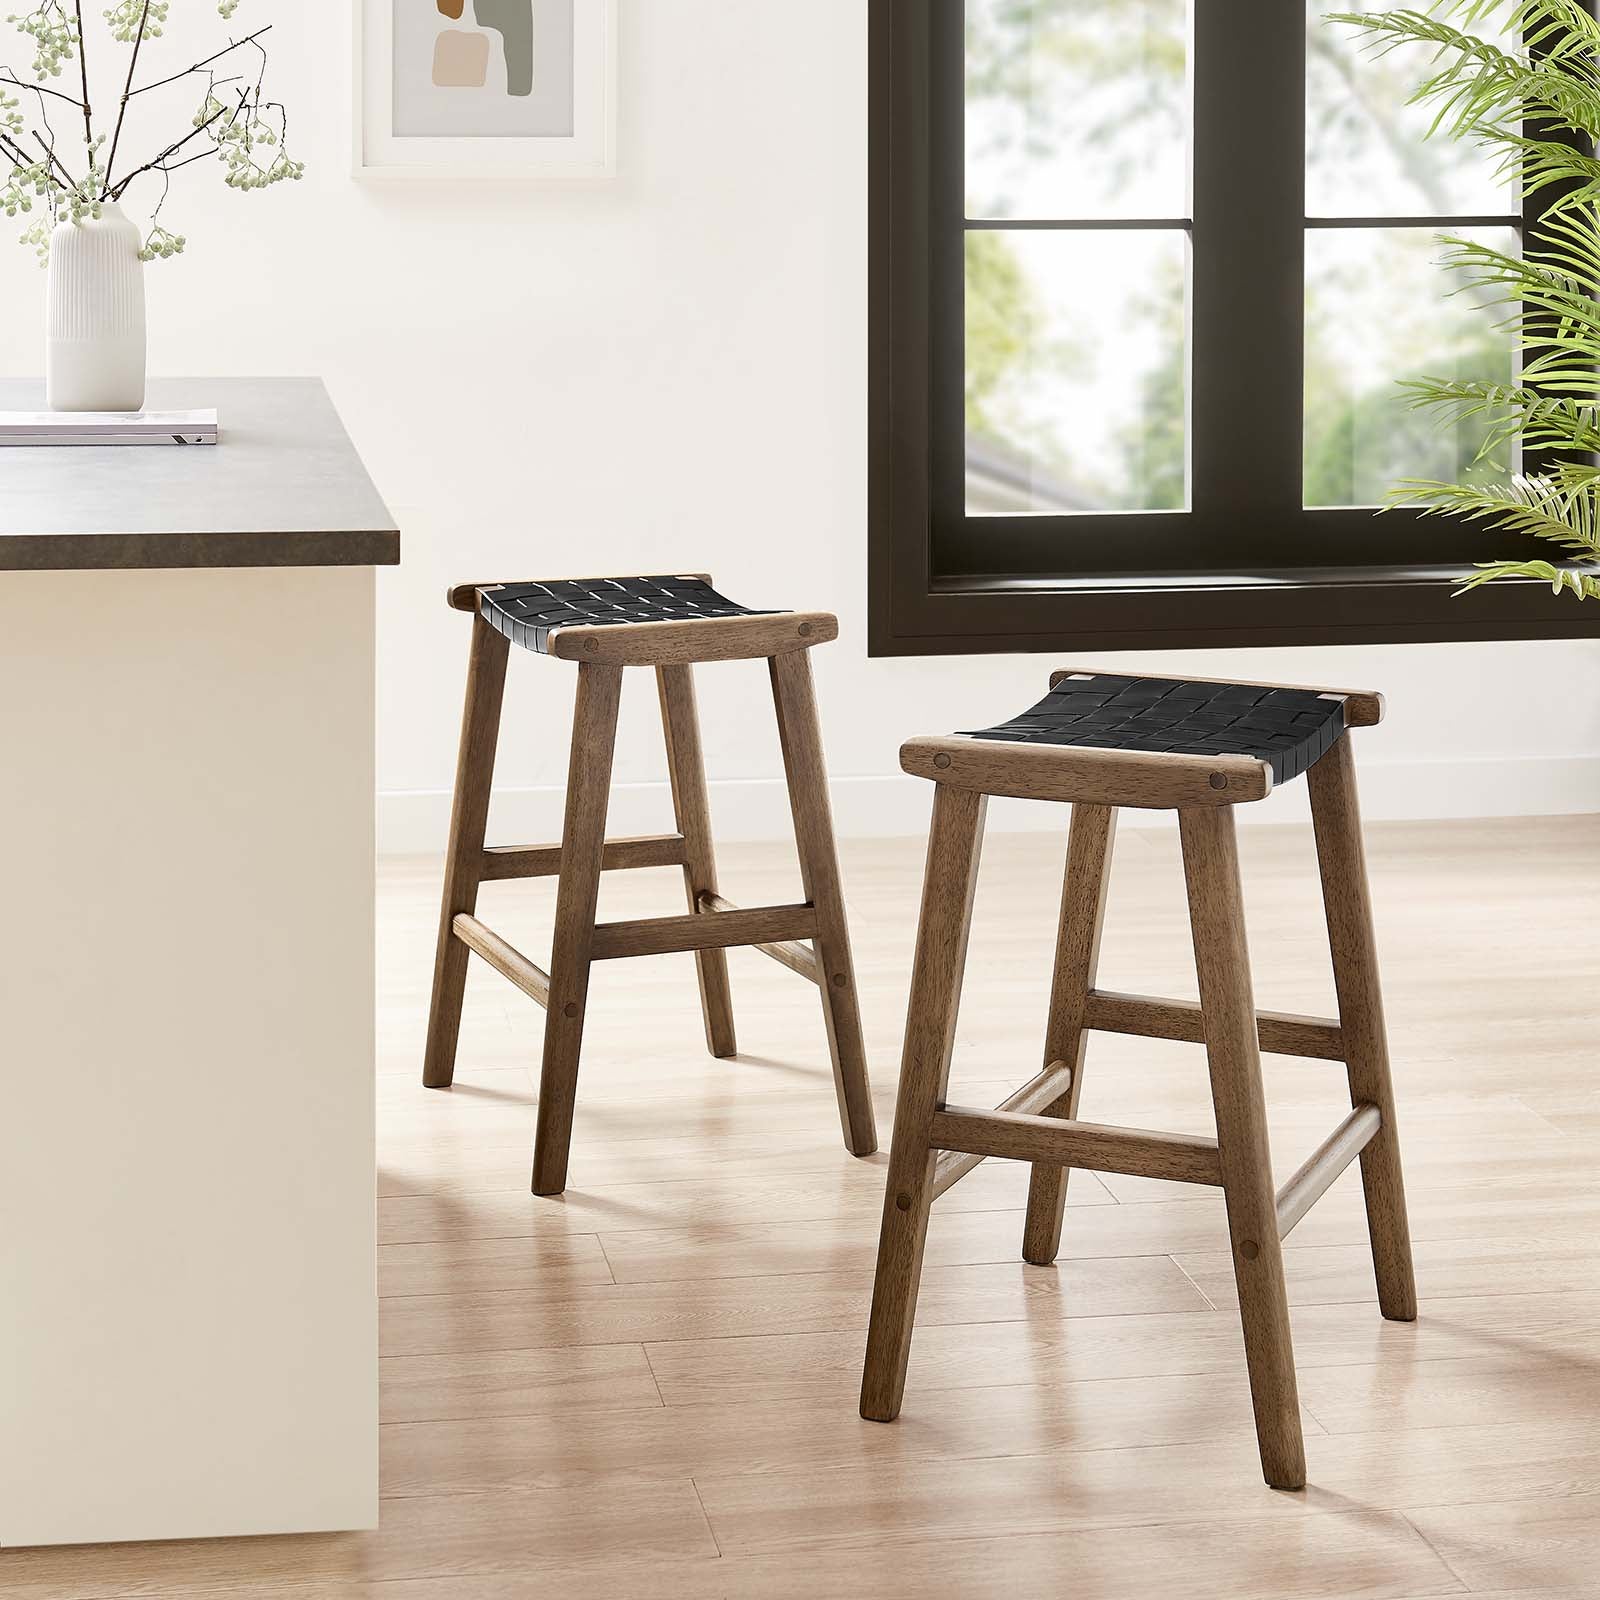 Saorise Woven Leather Wood Counter Stool - Set of 2 - East Shore Modern Home Furnishings